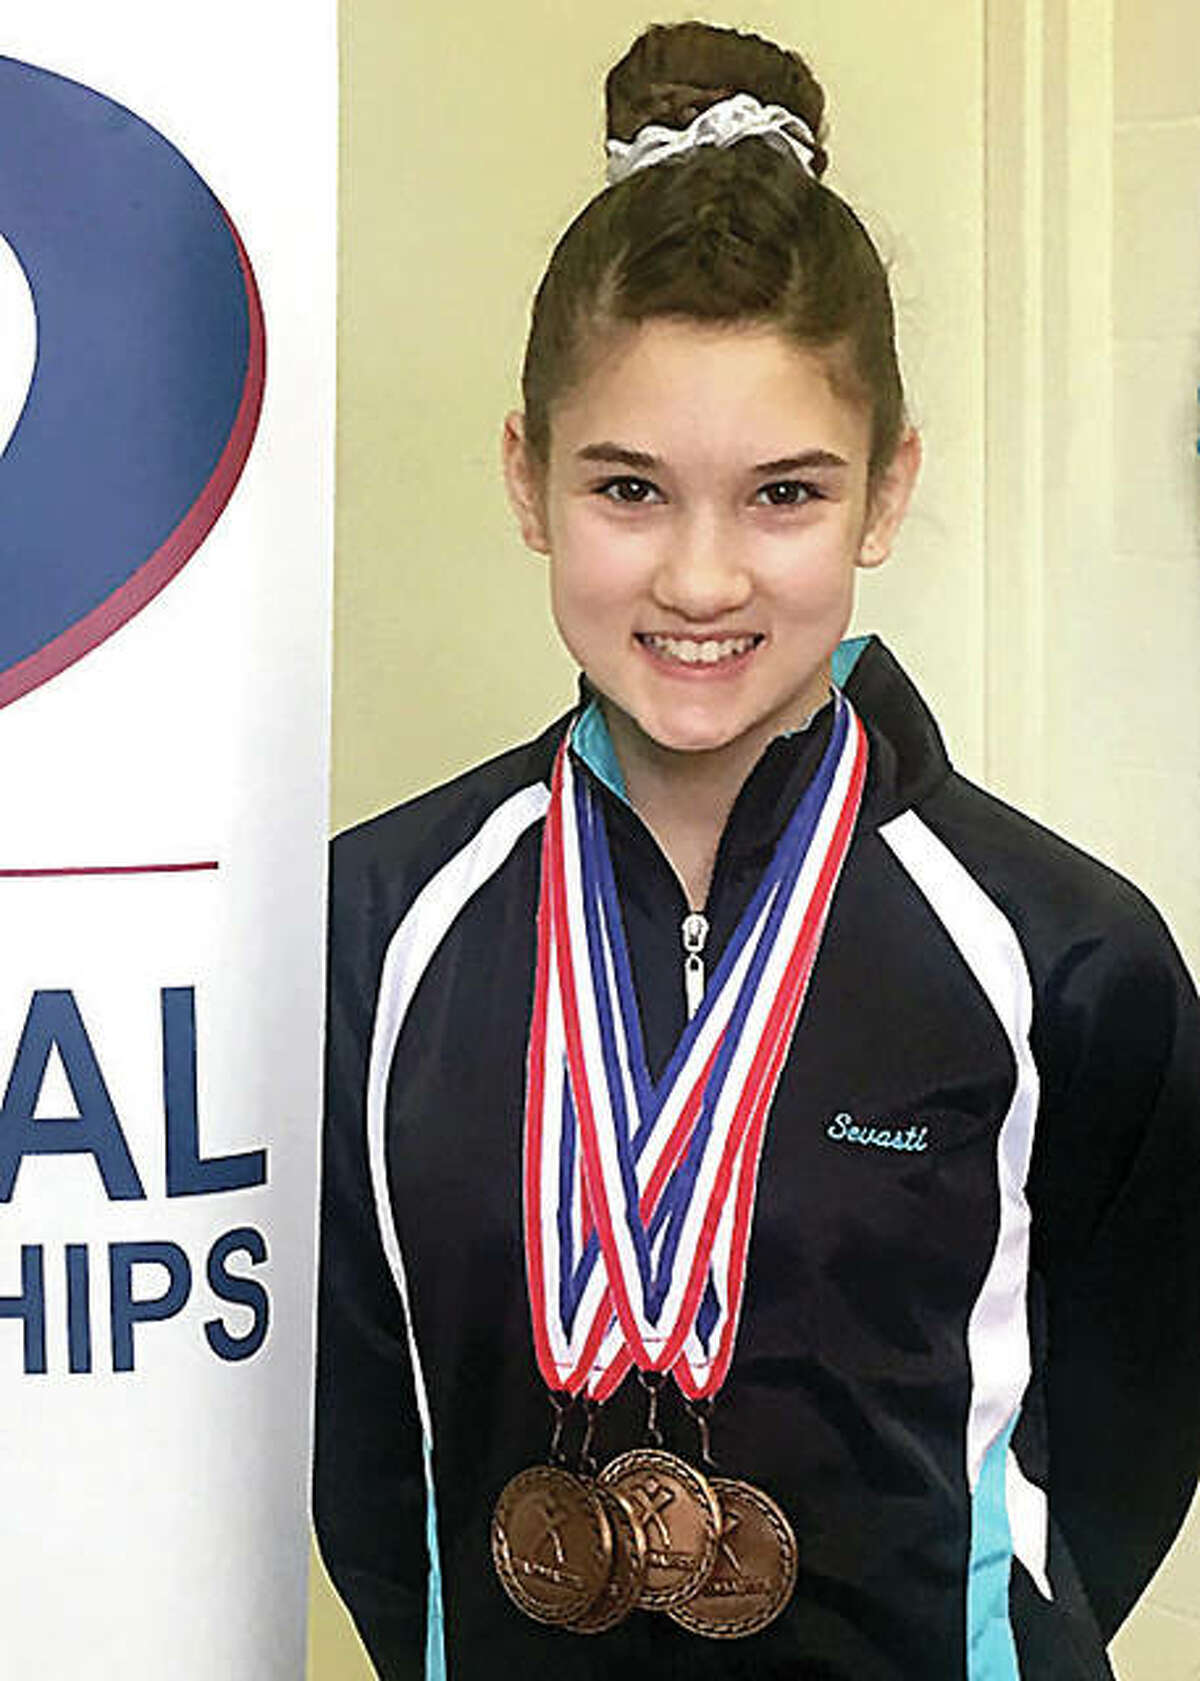 Sevasti Binolis, 13, of Mid Illinois Gymmastics in Godfrey, displays the medals she won at the recent Region 5 Gymnastics Championships in Ohio.